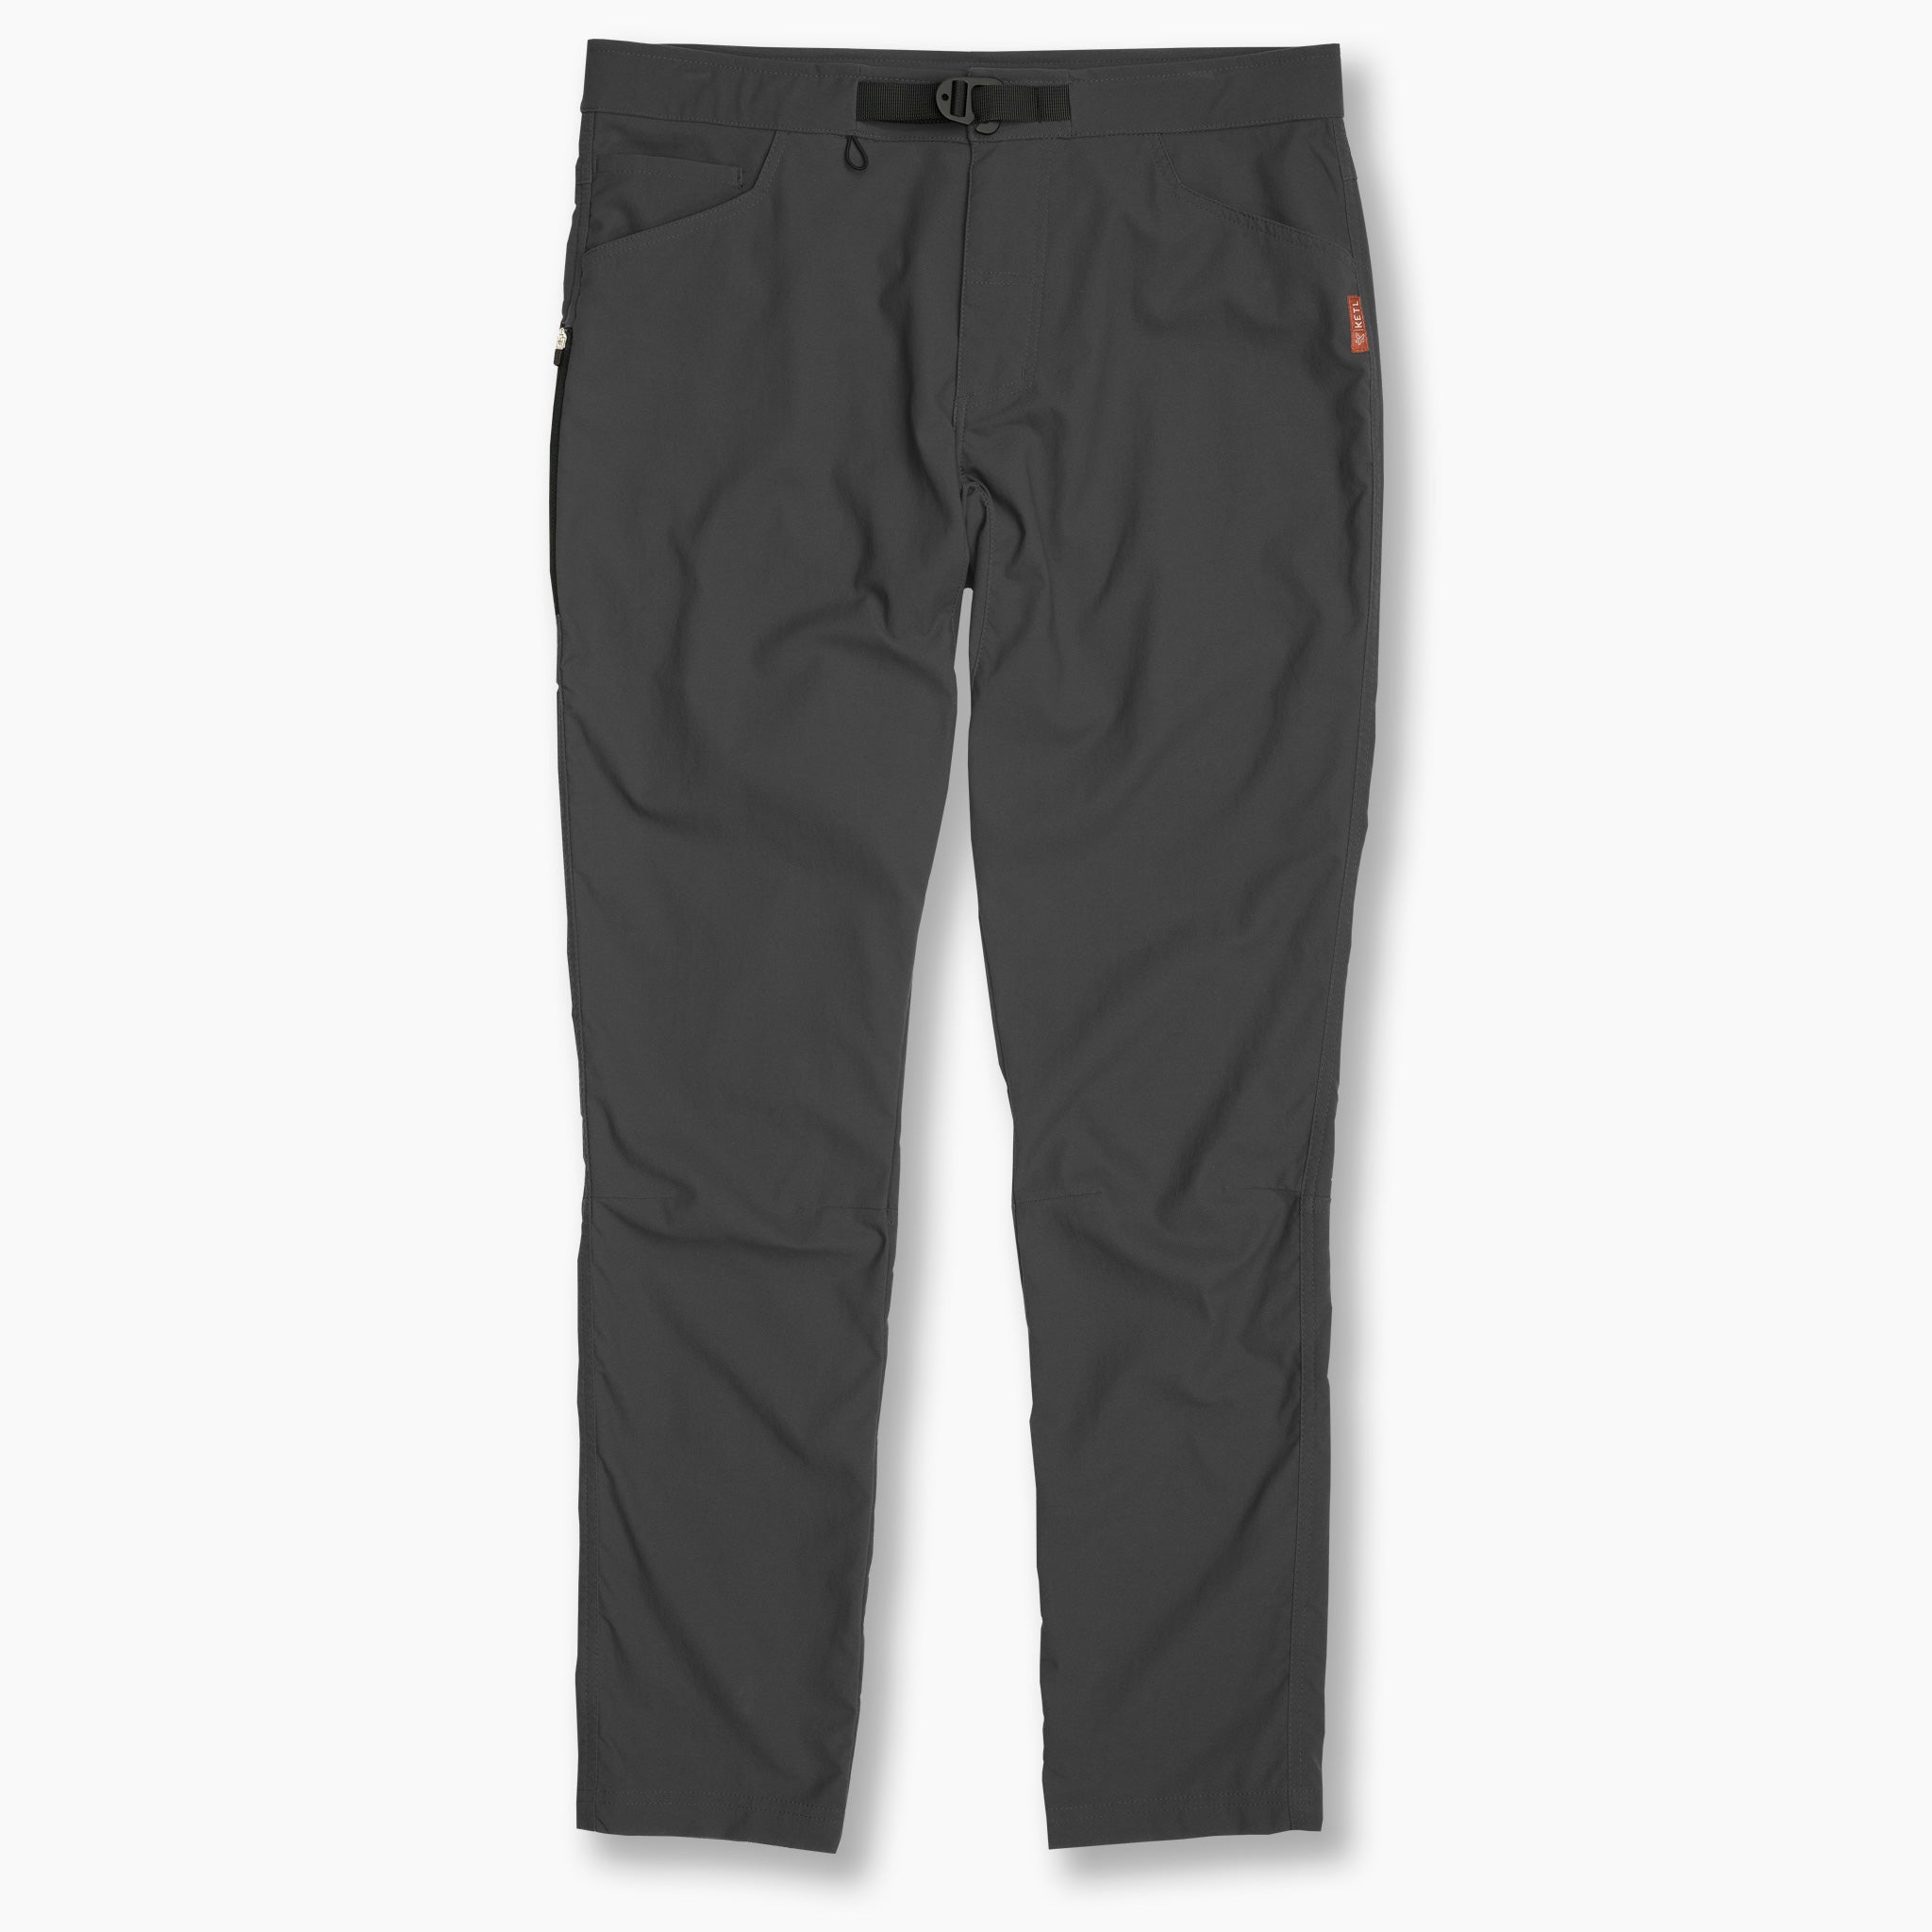 Match Men's Wild Cargo Pants(Brown,27) at Amazon Men's Clothing store